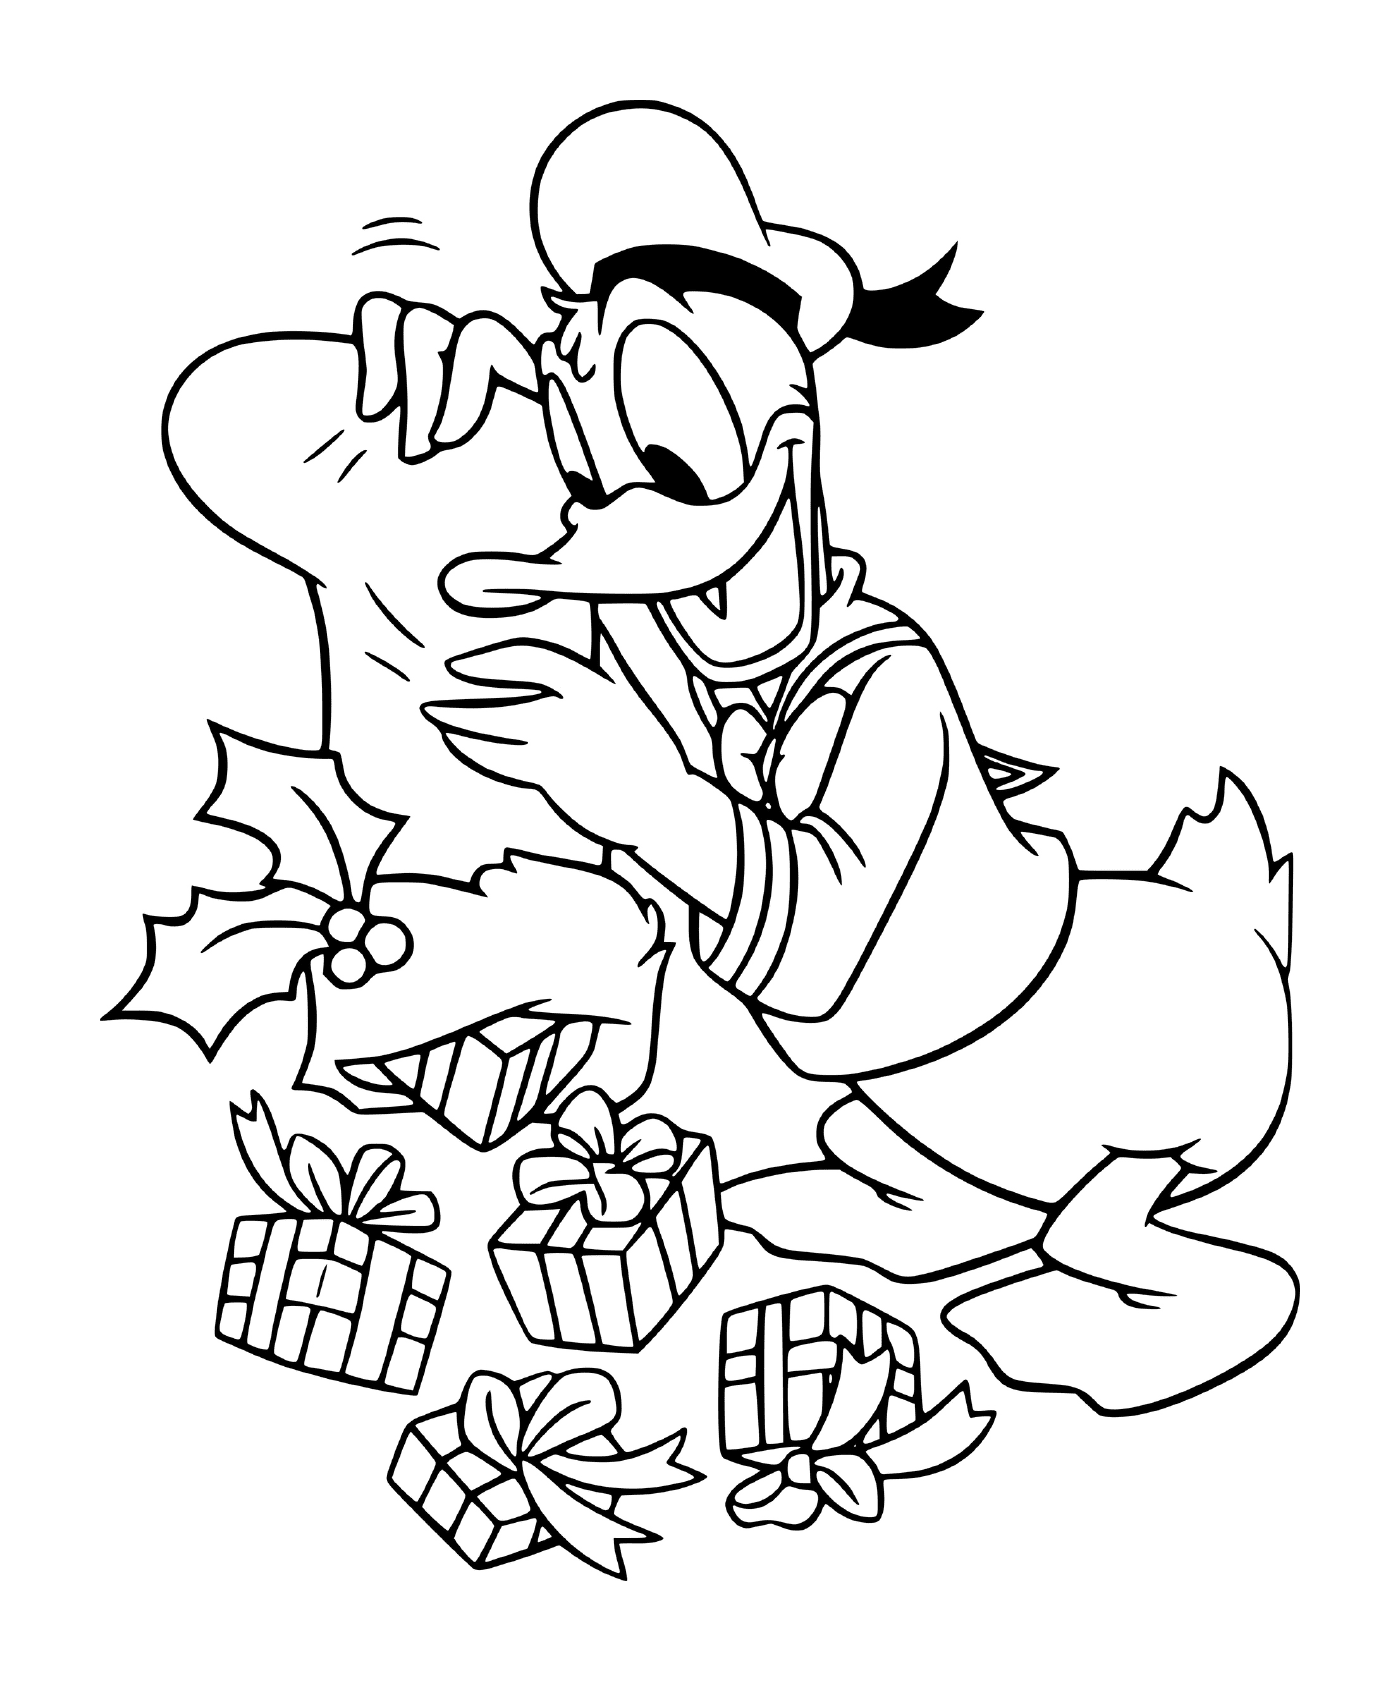  Donald Duck da Disney svuota le sue calze natalizie piene di regali 